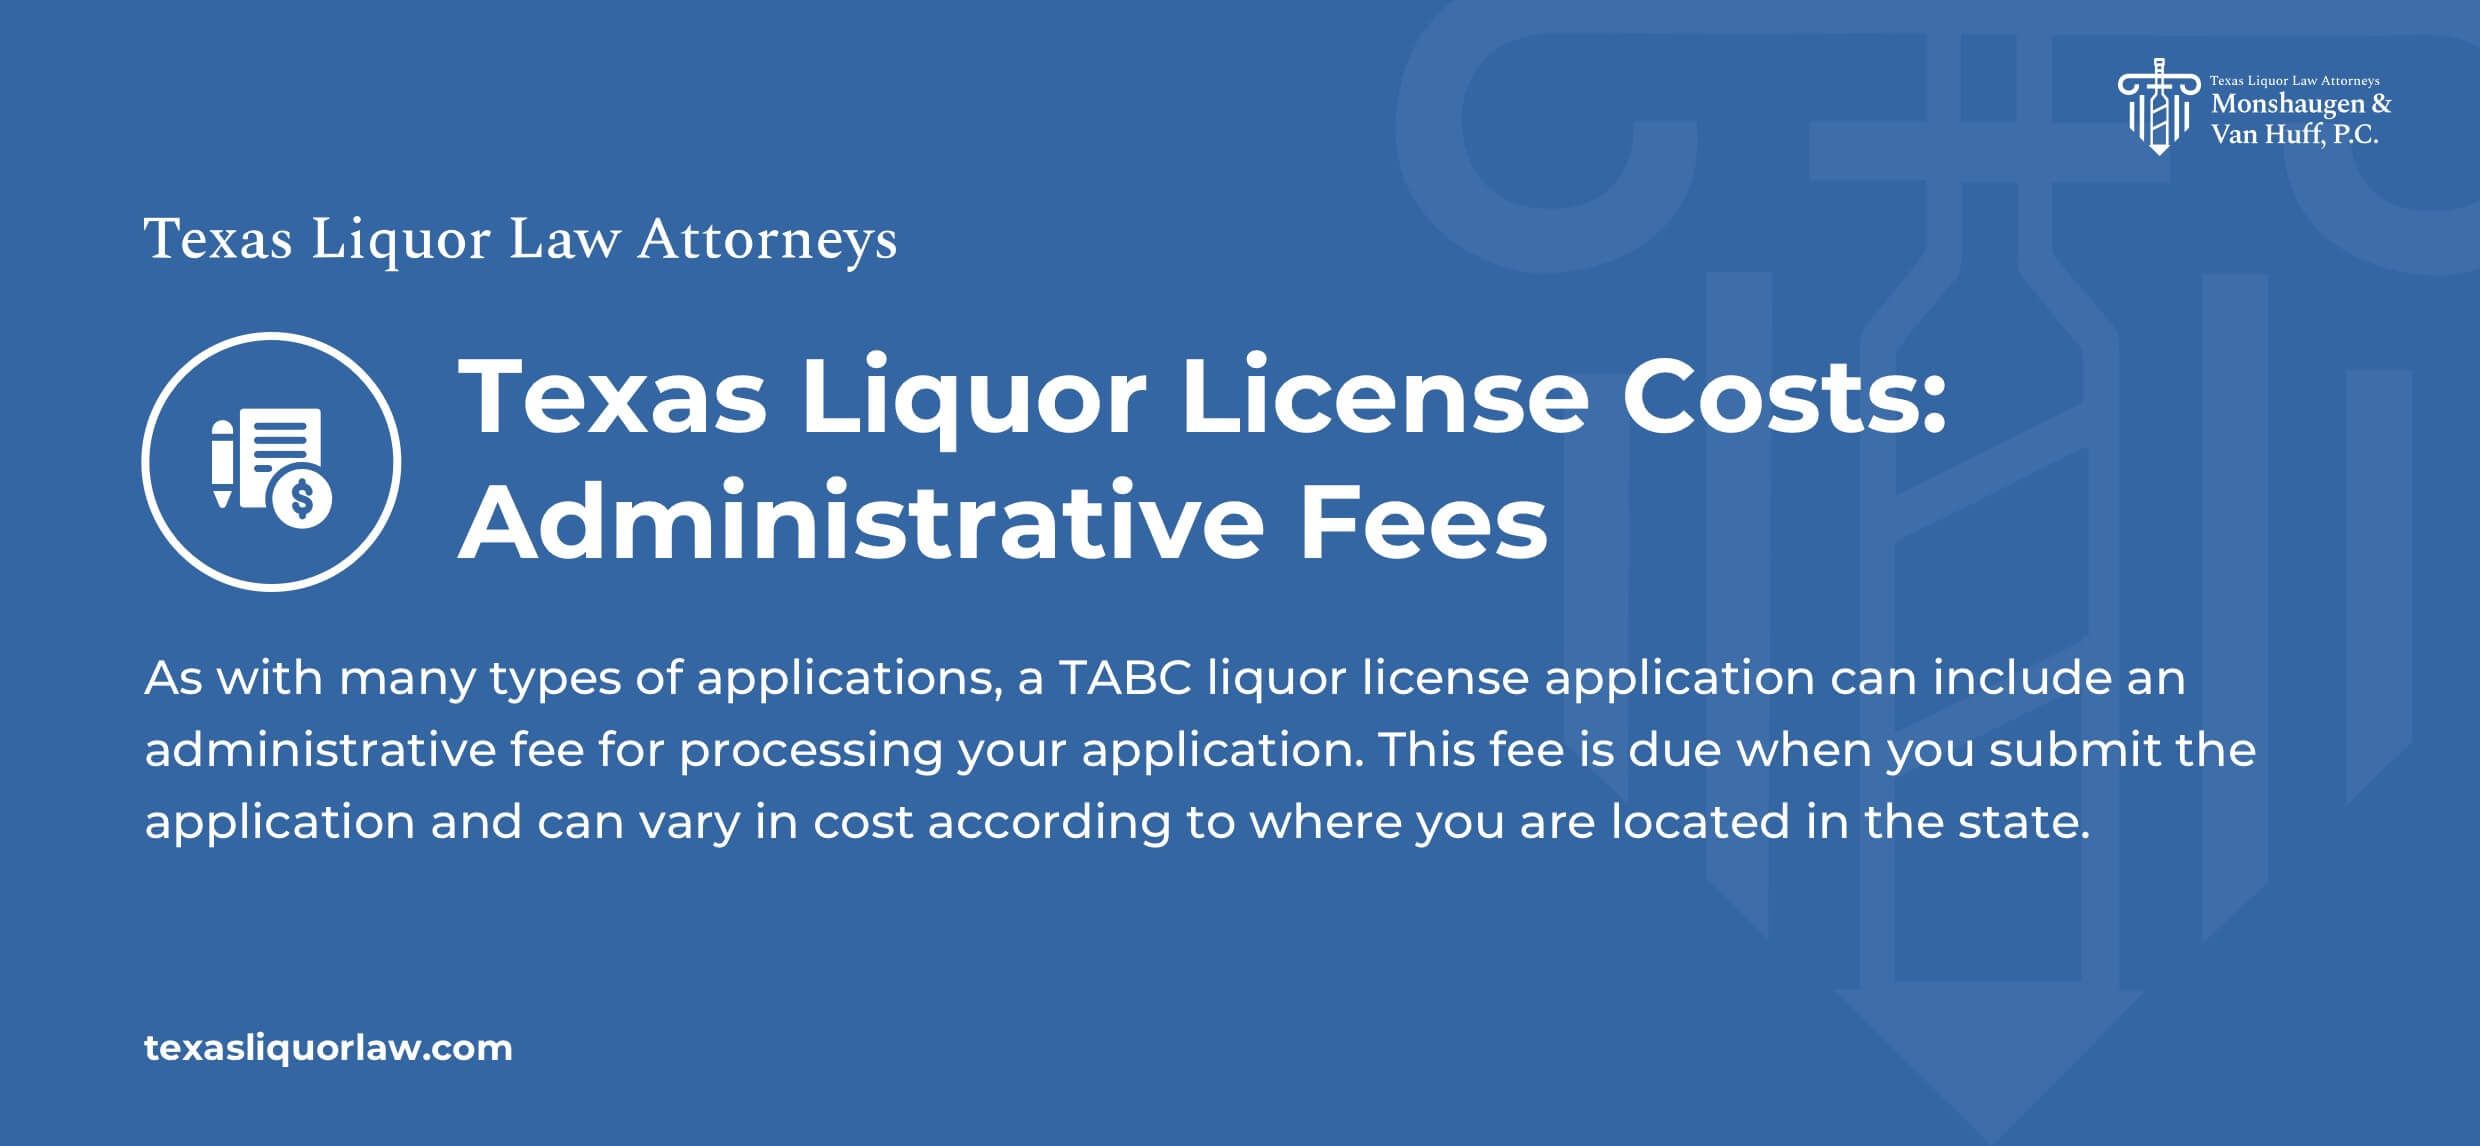 Administrative Fees Texas Liquor License Costs